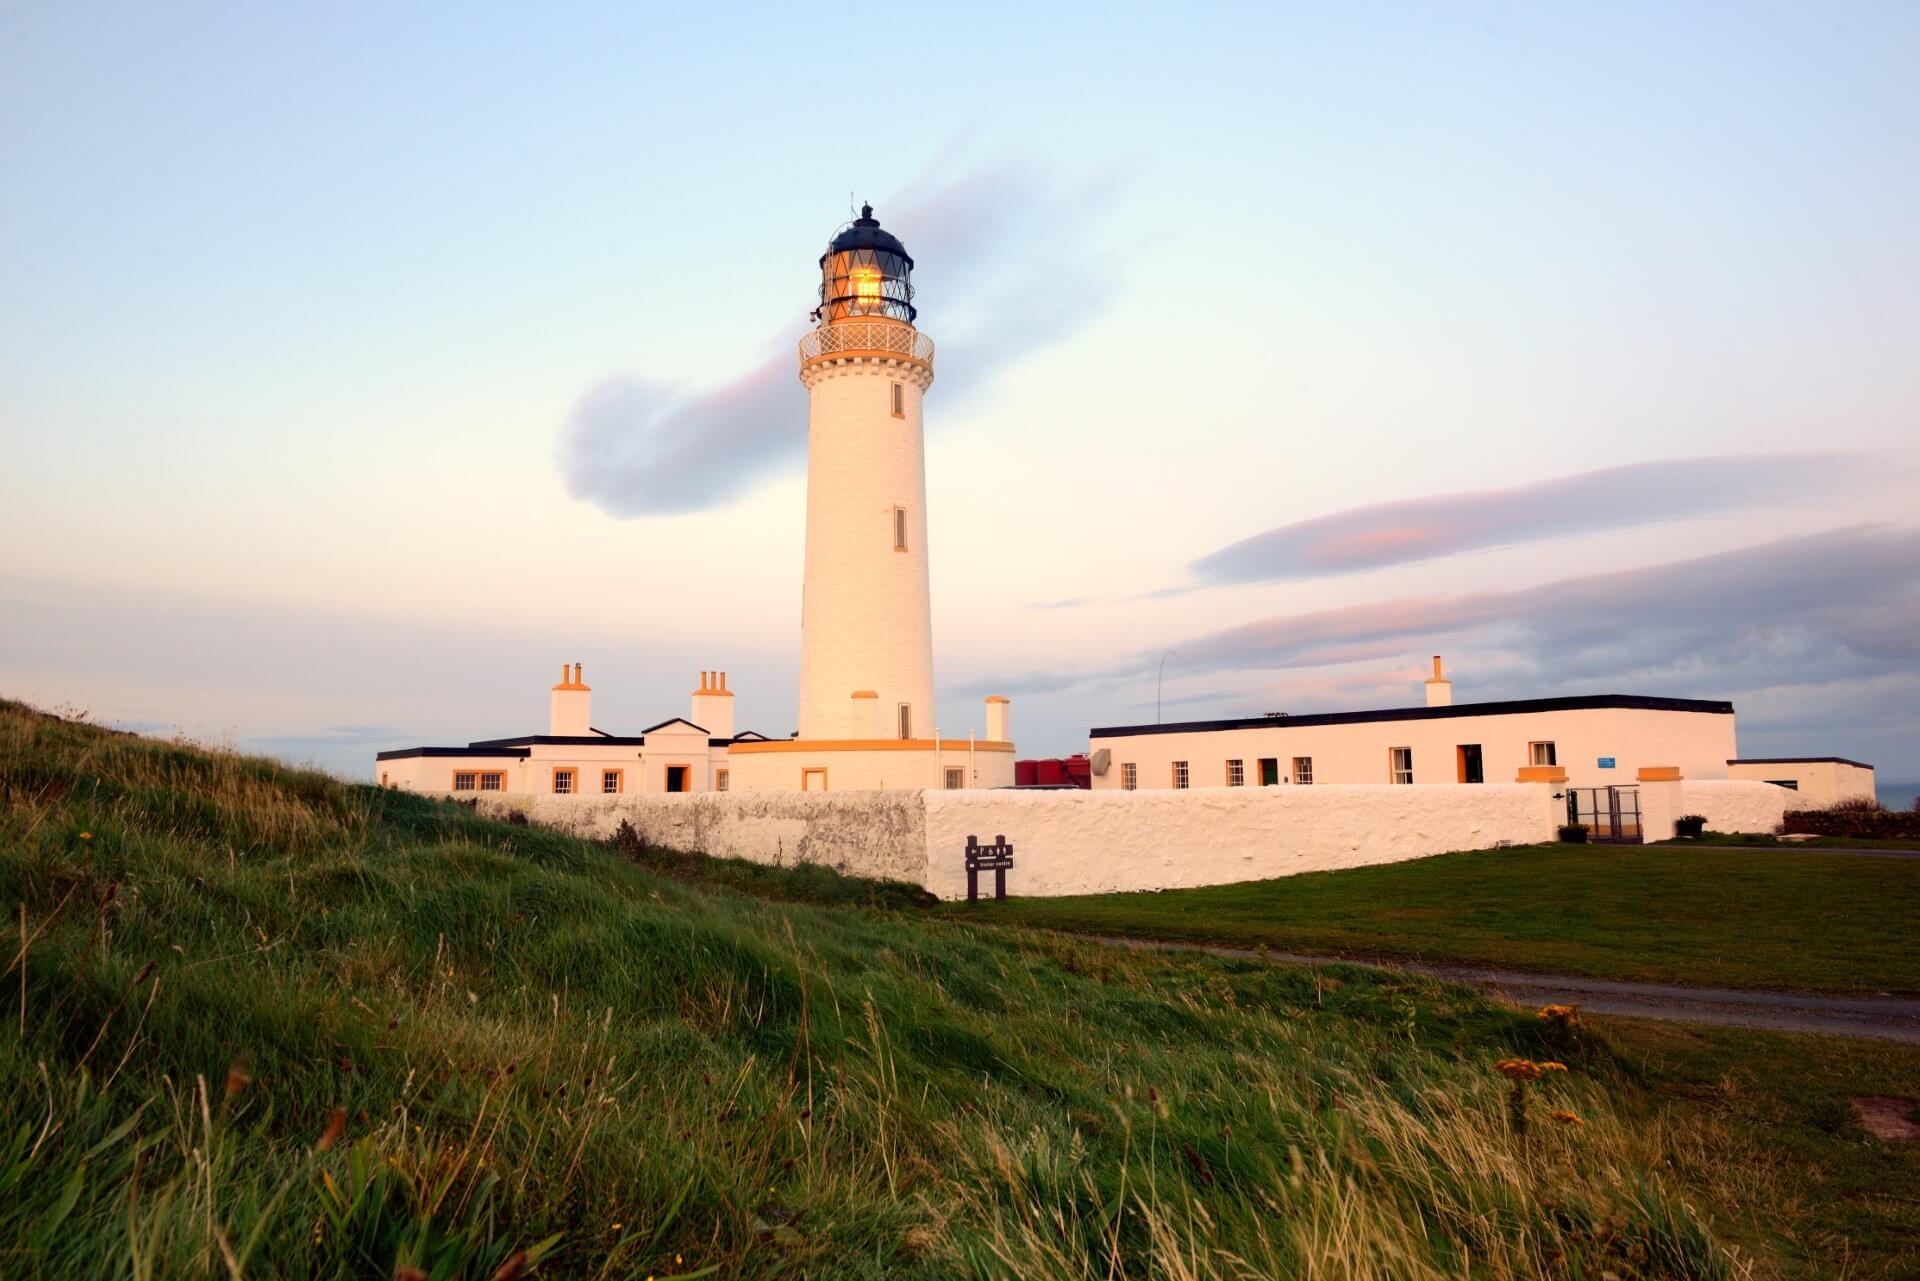 Northern Lighthouse